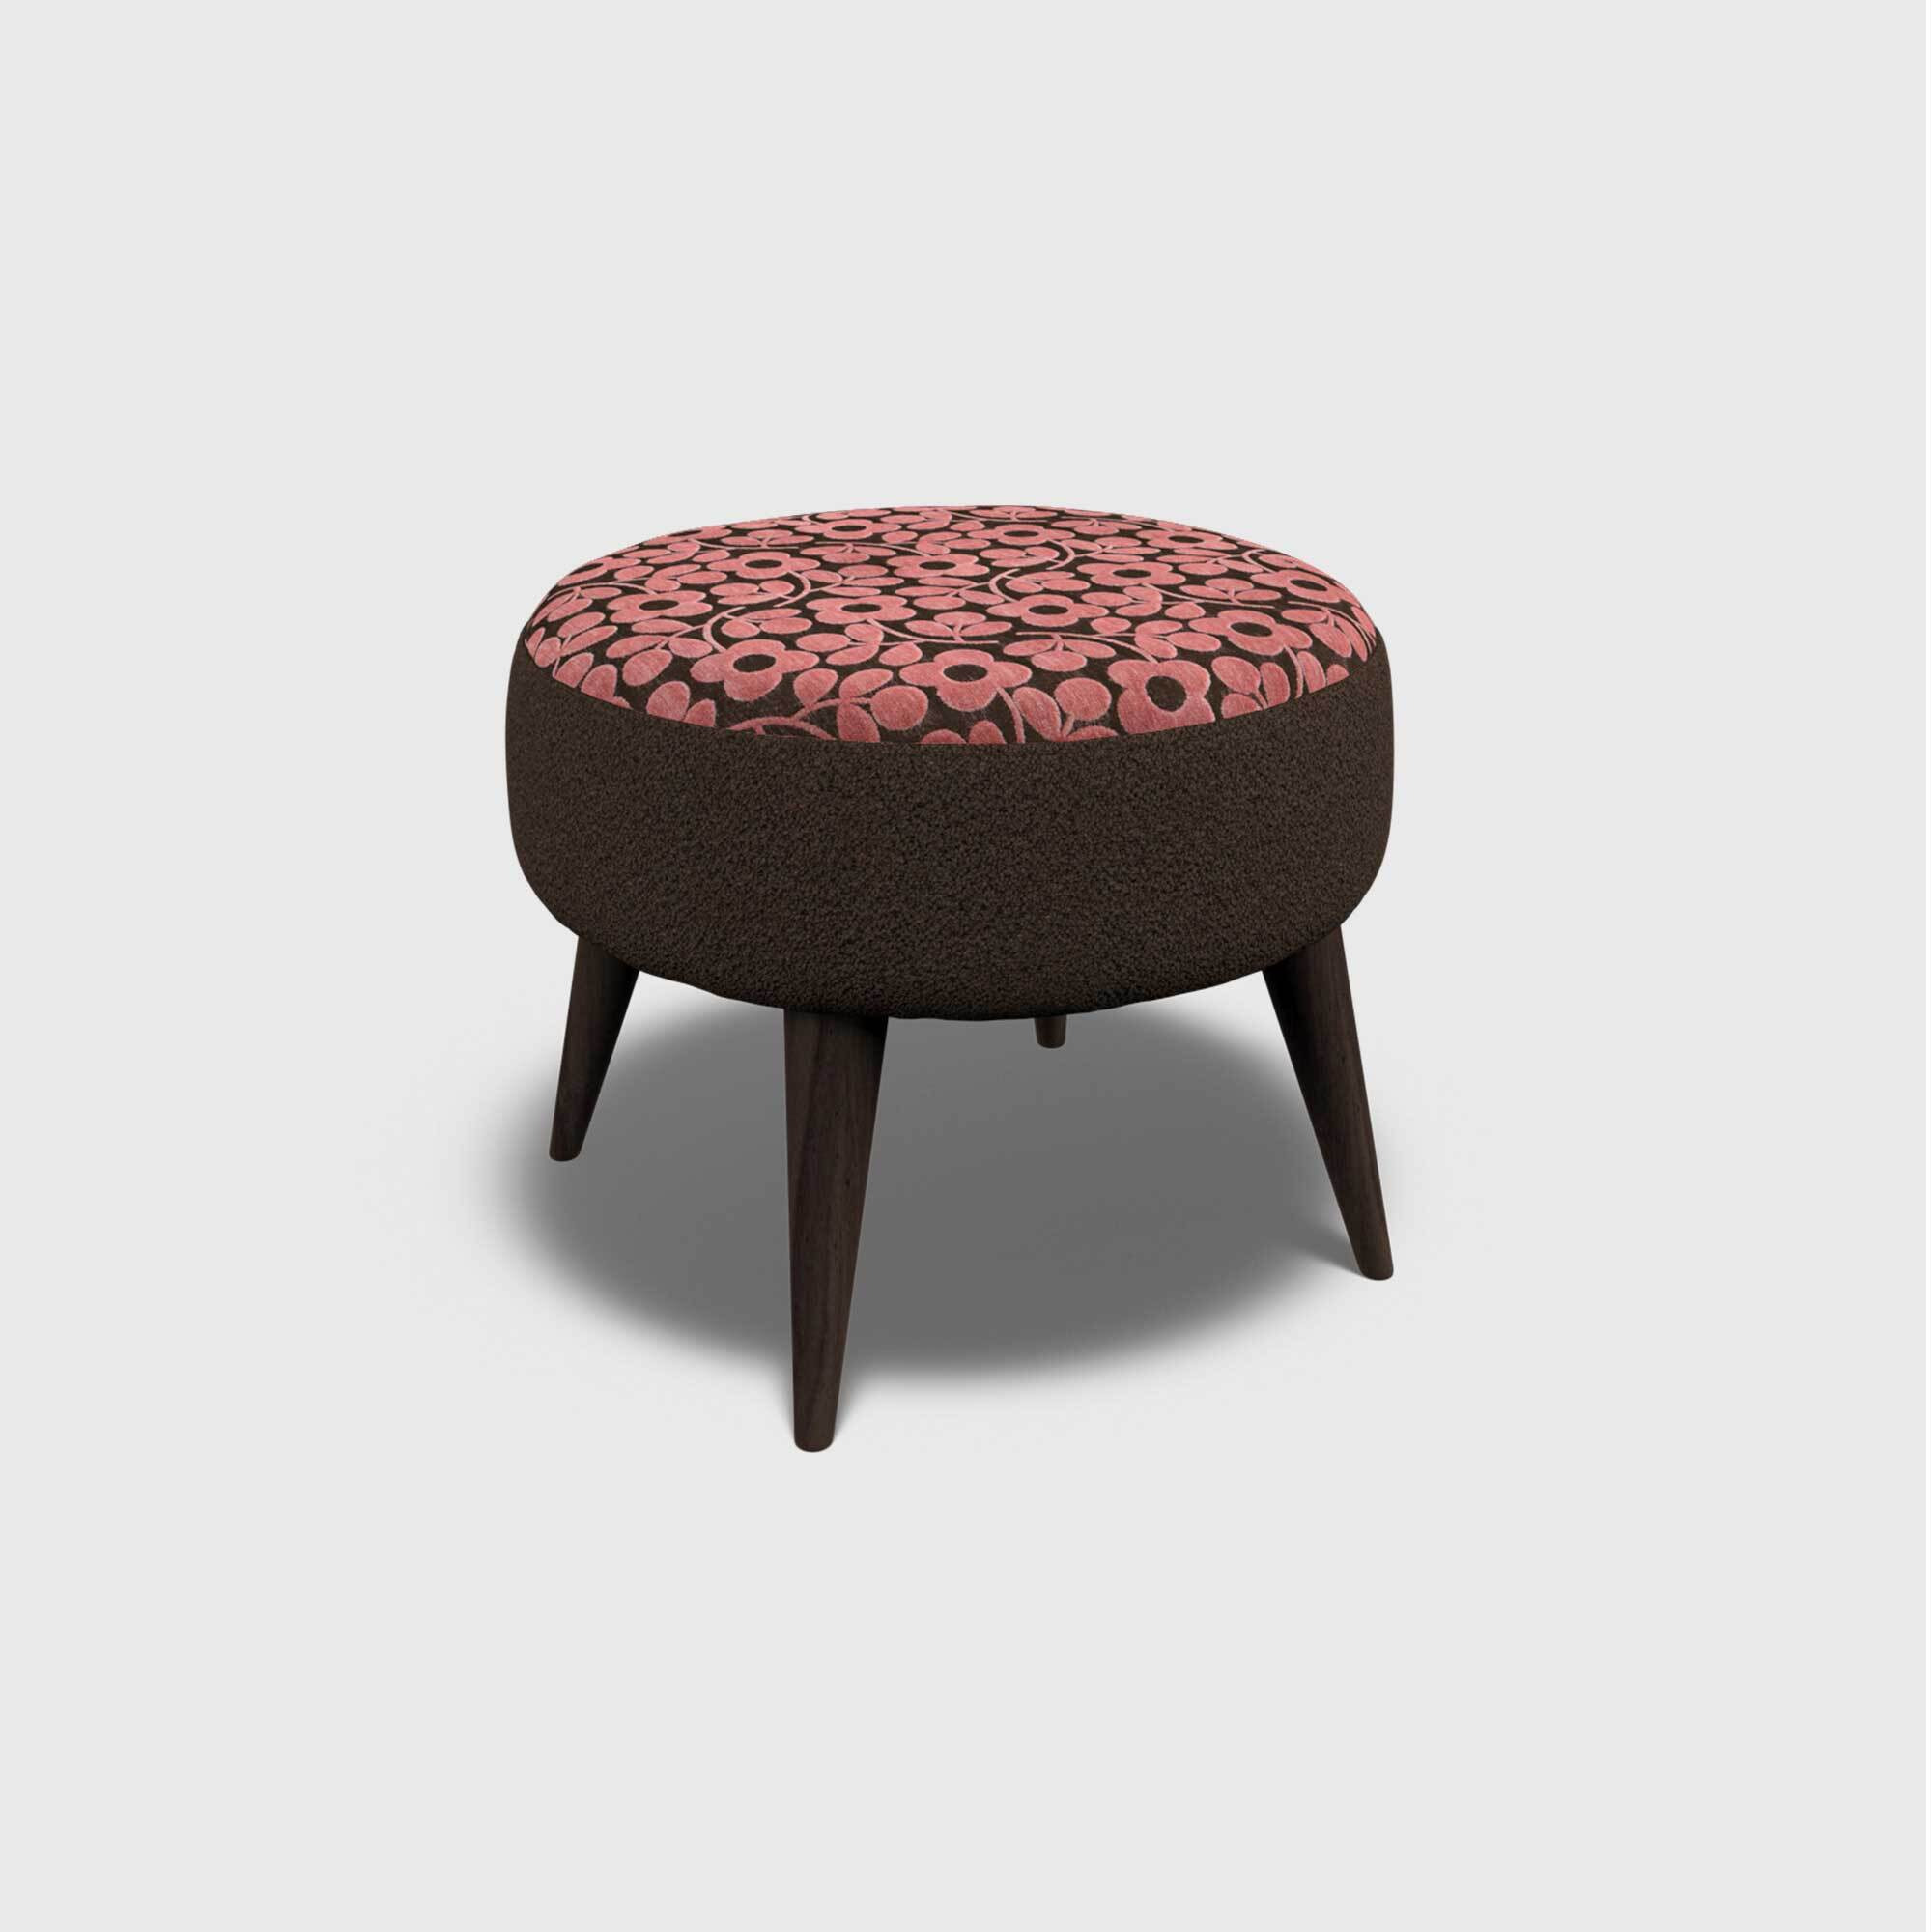 Orla Kiely Roundwood Footstool, Brown Fabric - Barker & Stonehouse - image 1